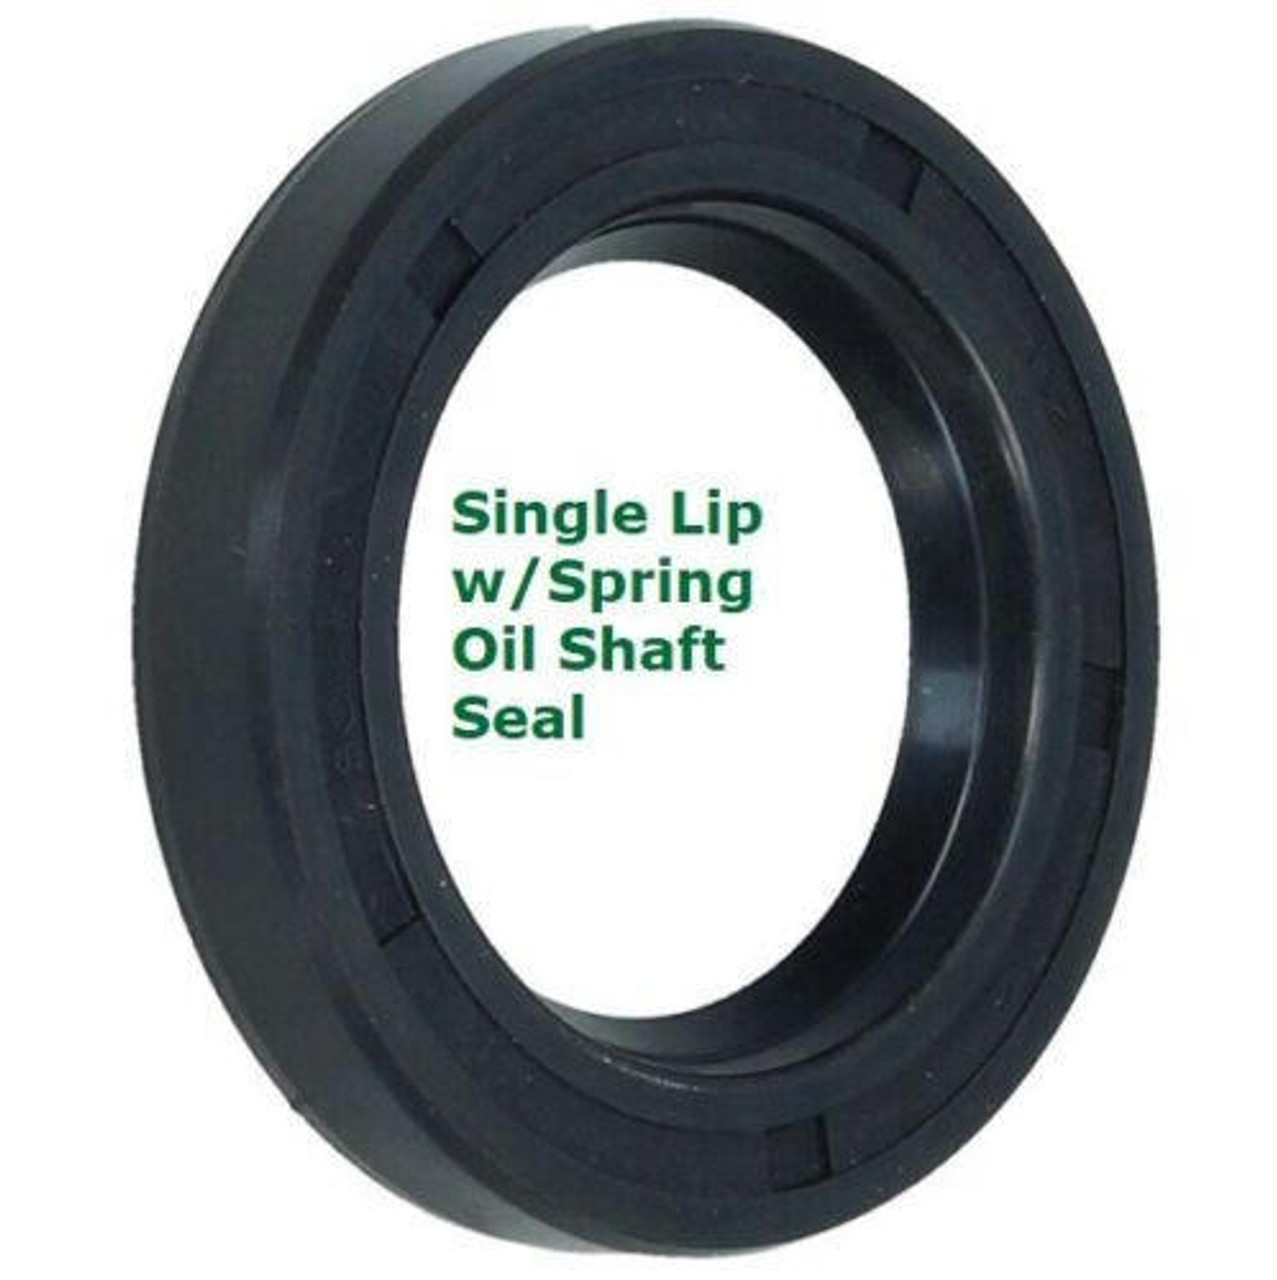 Metric Oil Shaft Seal 162 x 190 x 12mm Single Lip   Price for 1 pc